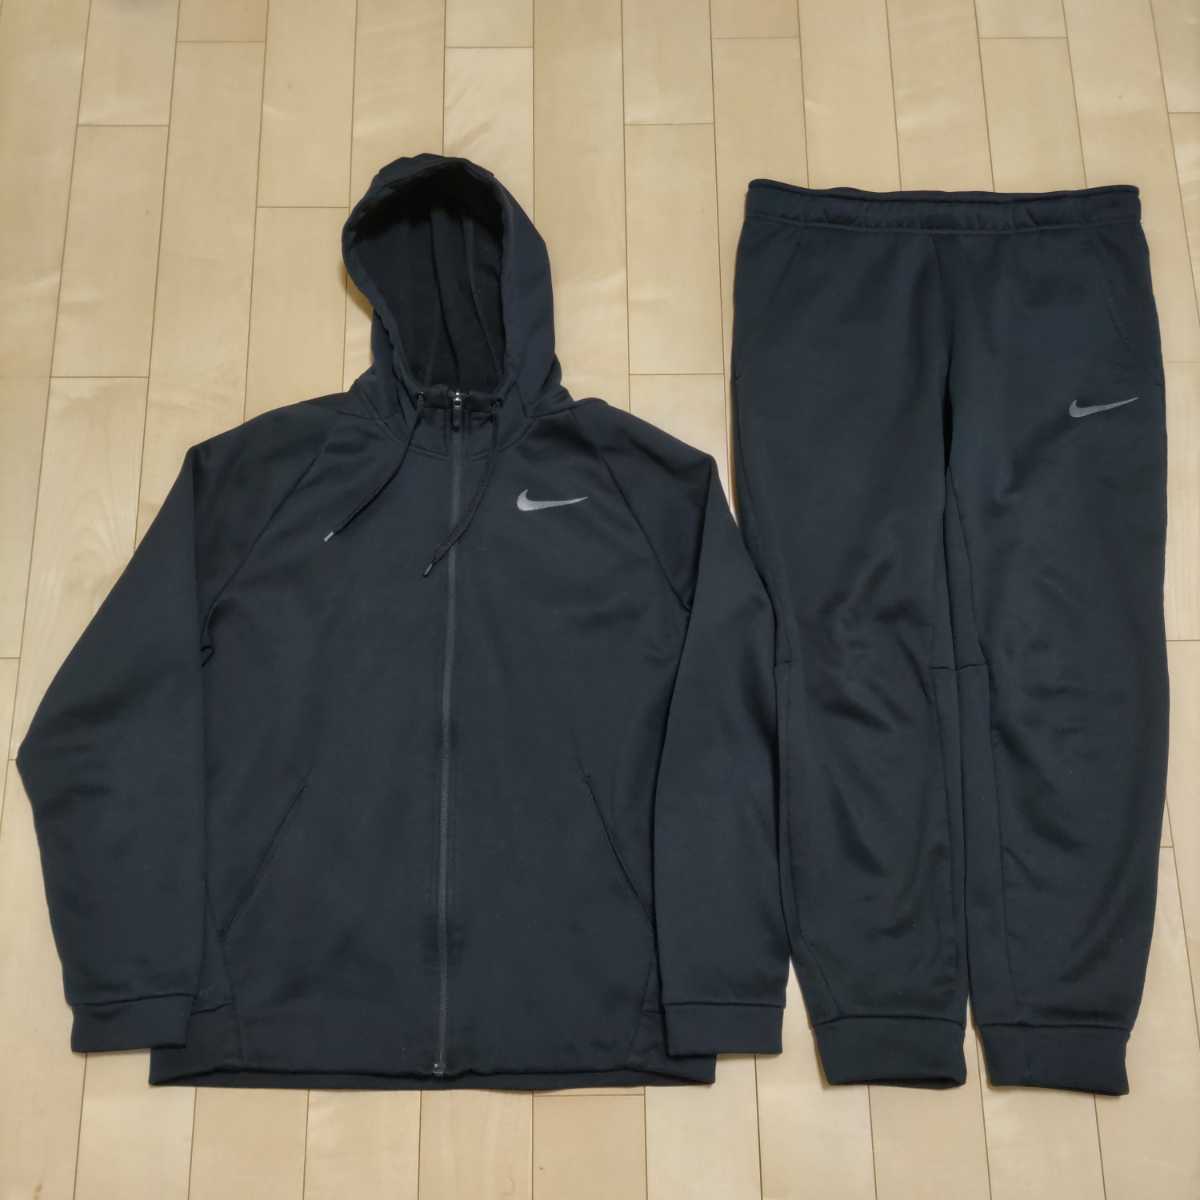 NIKE Nike jersey pants jogger jacket setup top and bottom black black XL